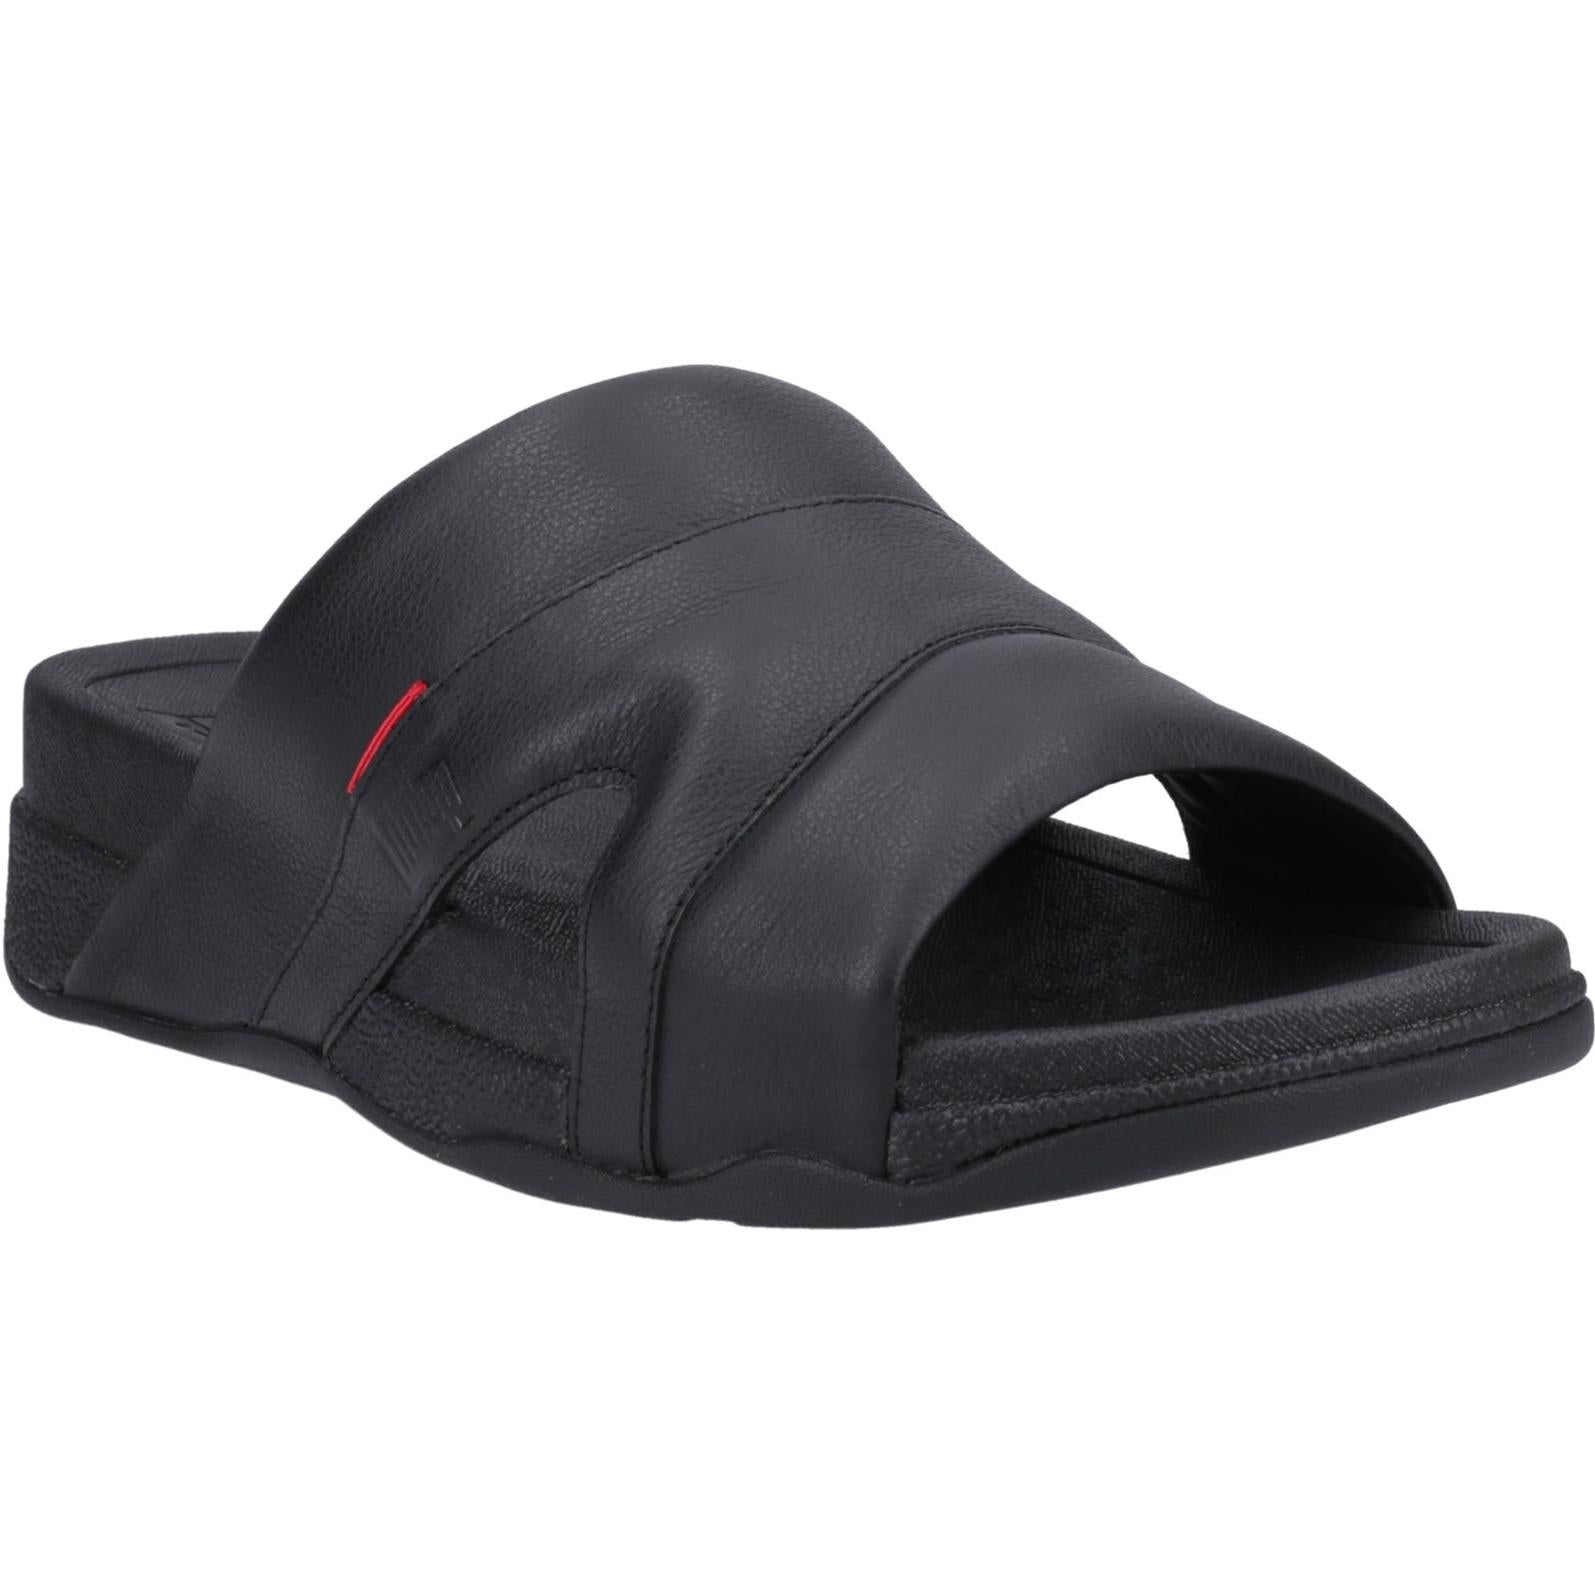 Fitflop Freeway Slide Sandals